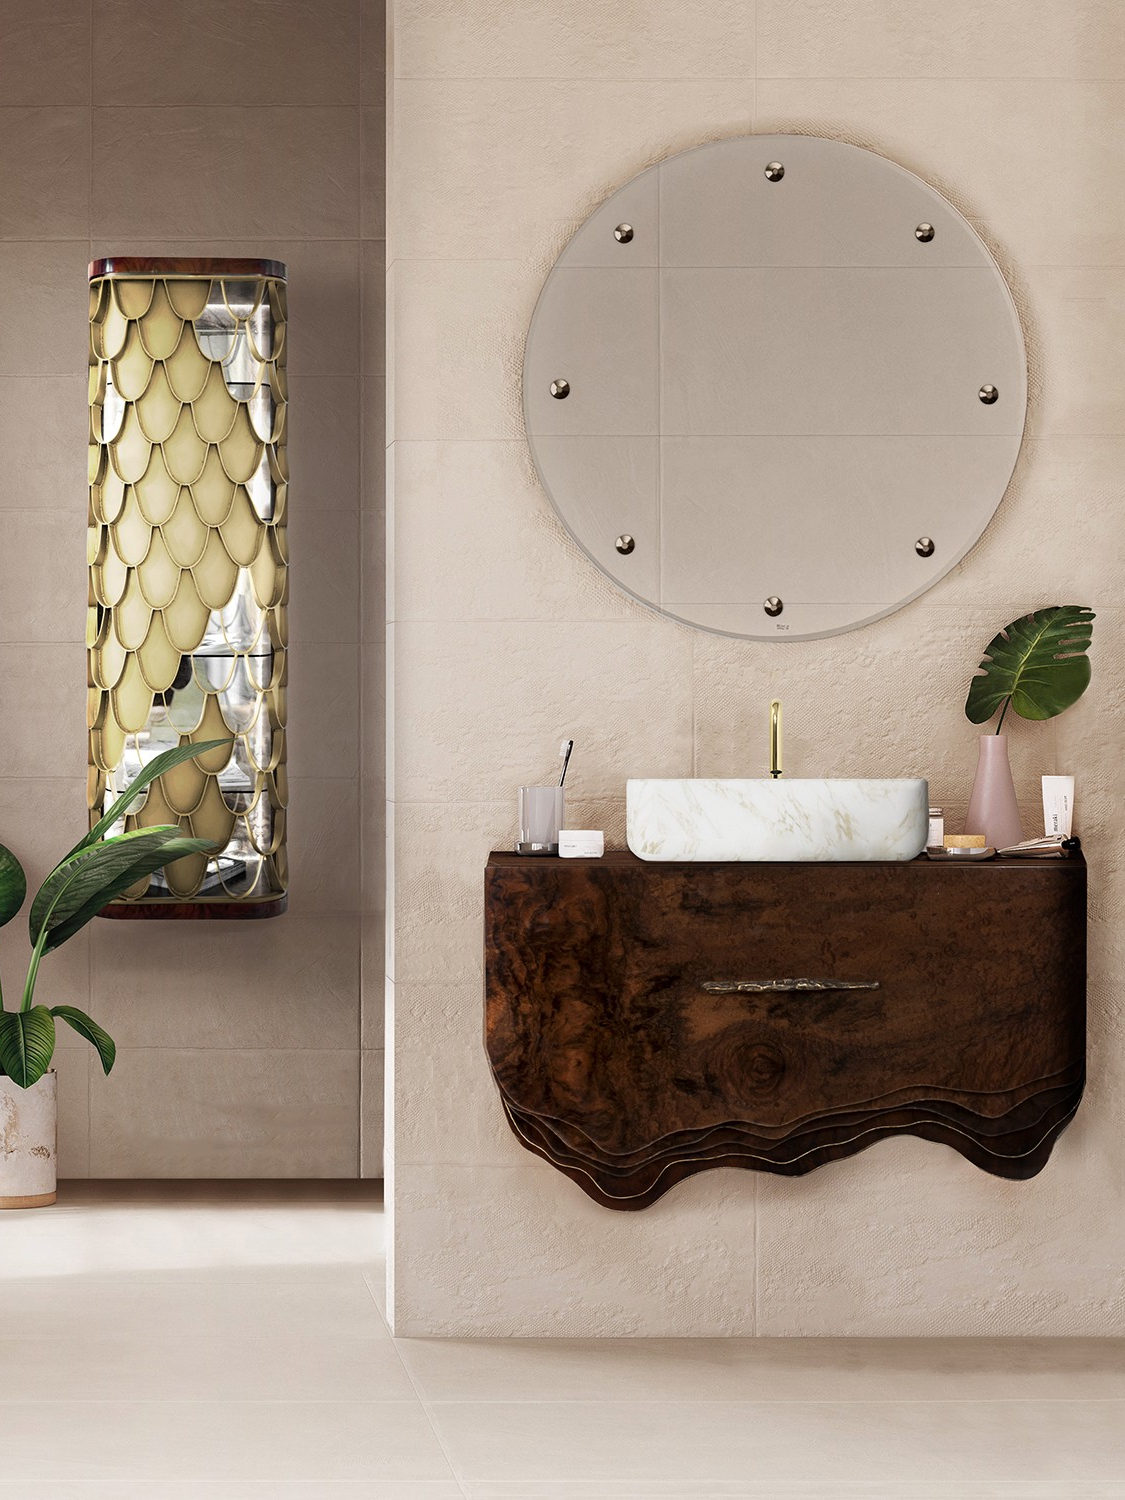 Simplistic Modern Bathroom With Wooden Wall Mounted Bathroom Vanity - Home'Society